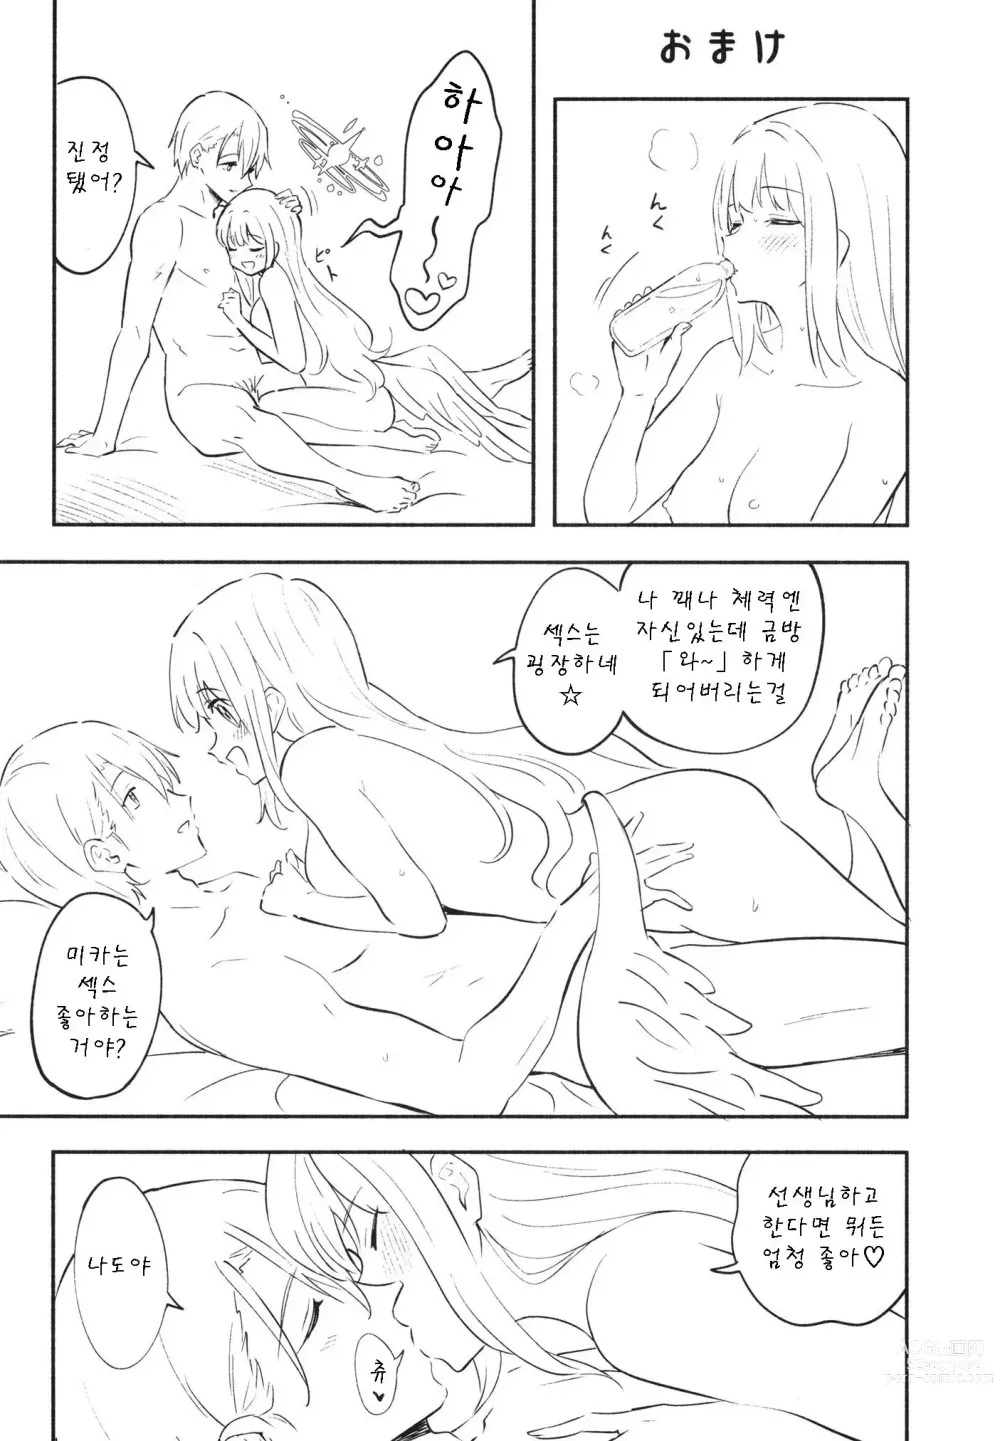 Page 21 of doujinshi 미소노 미카는 선생님에게 너무 사랑 받는다